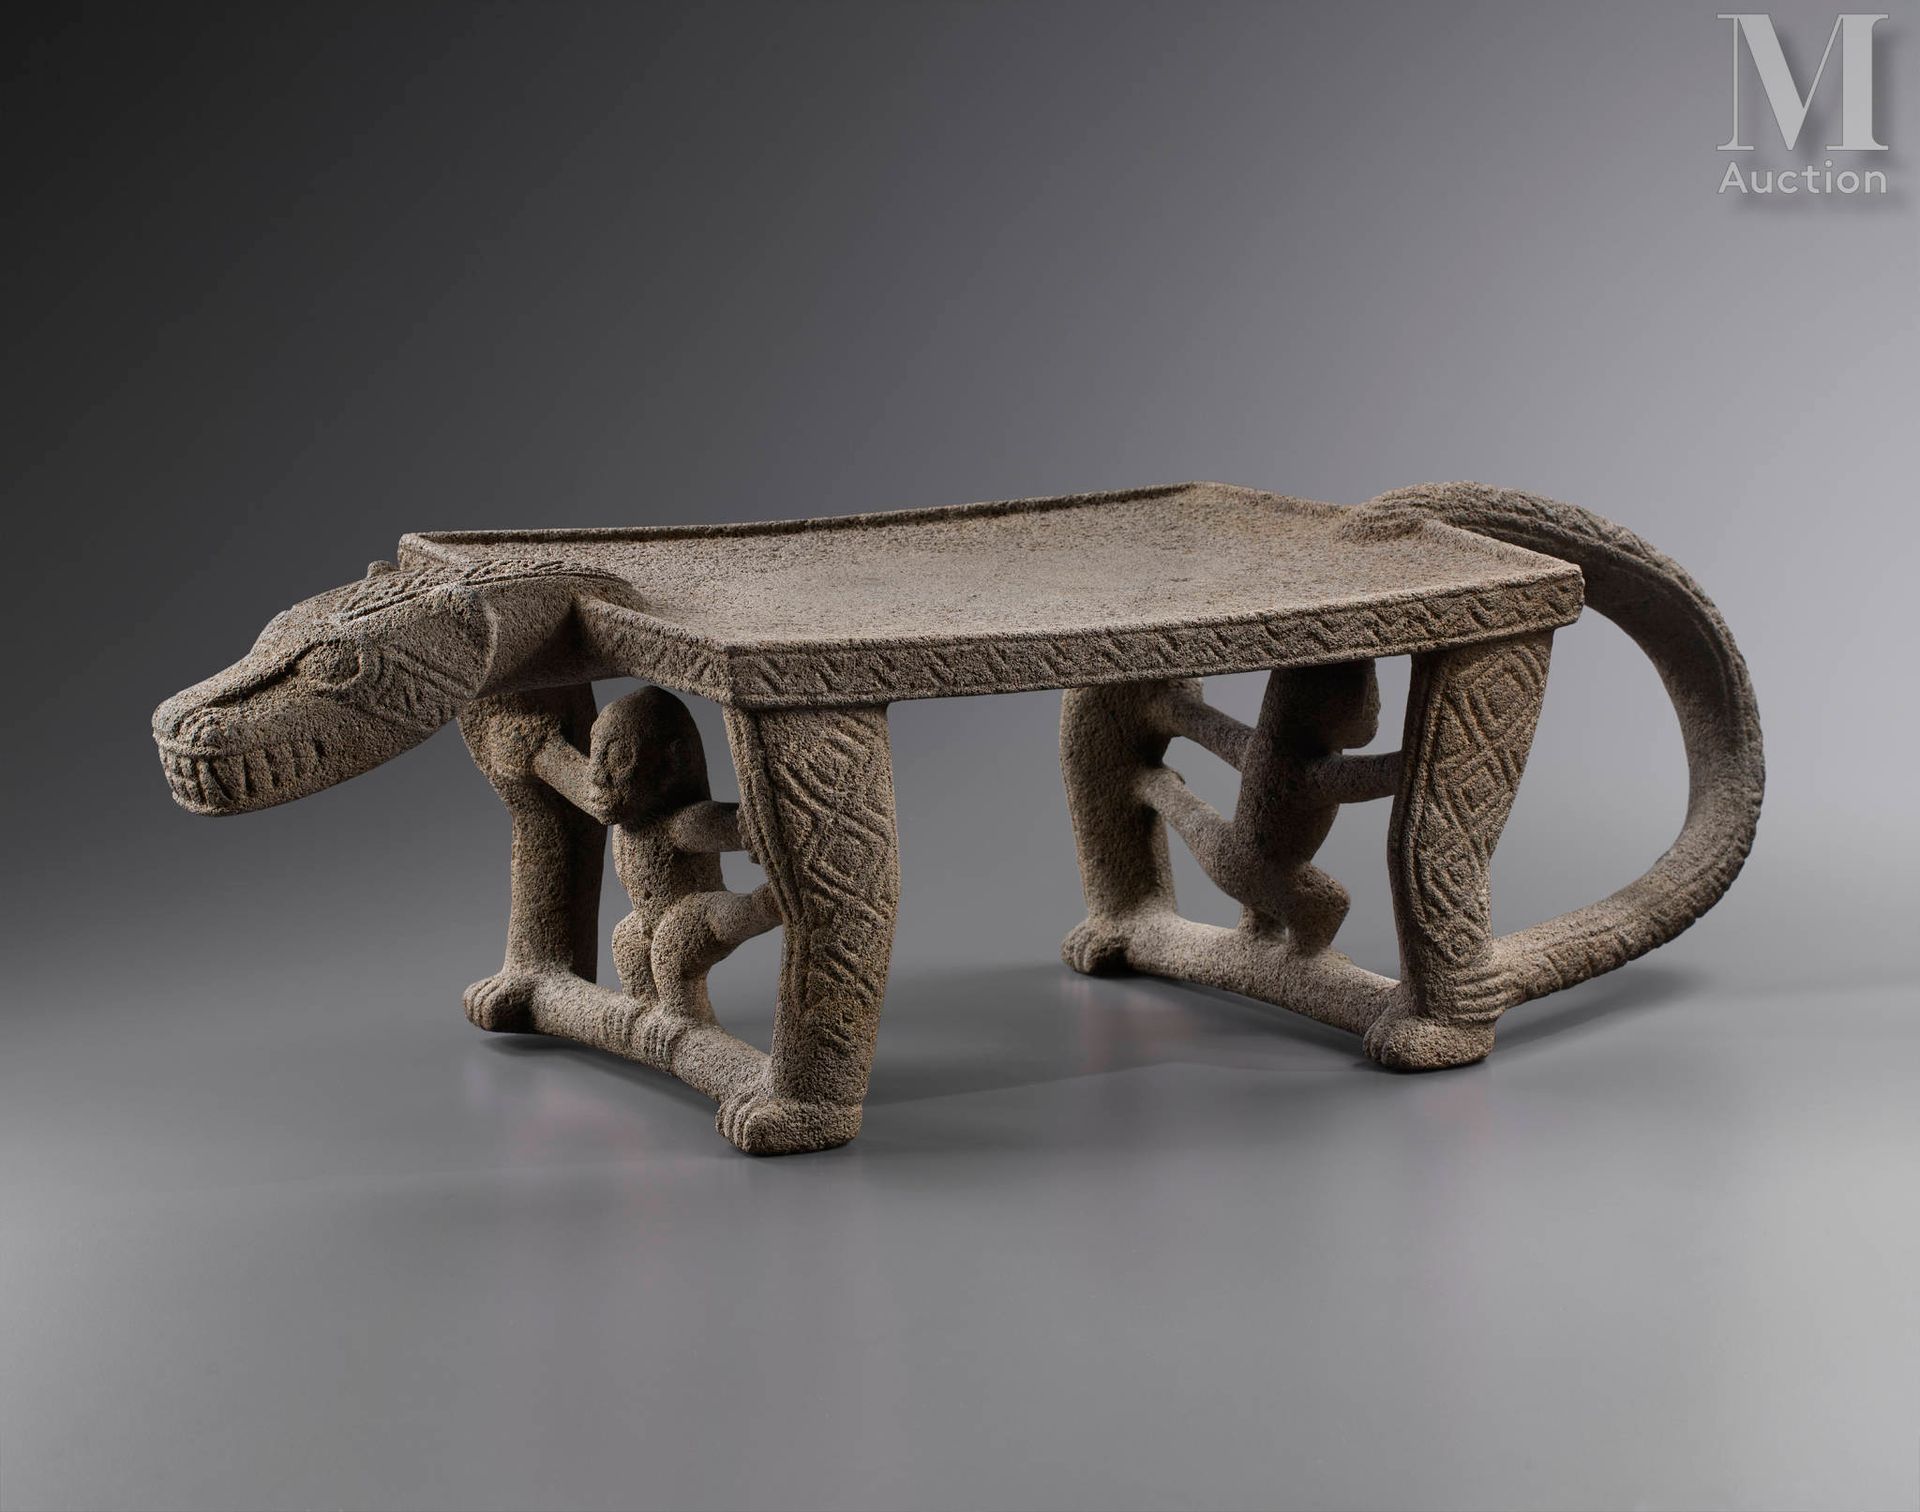 *Sculpture zoomorphe que representa un metate ceremonial en forma de jaguar. 

E&hellip;